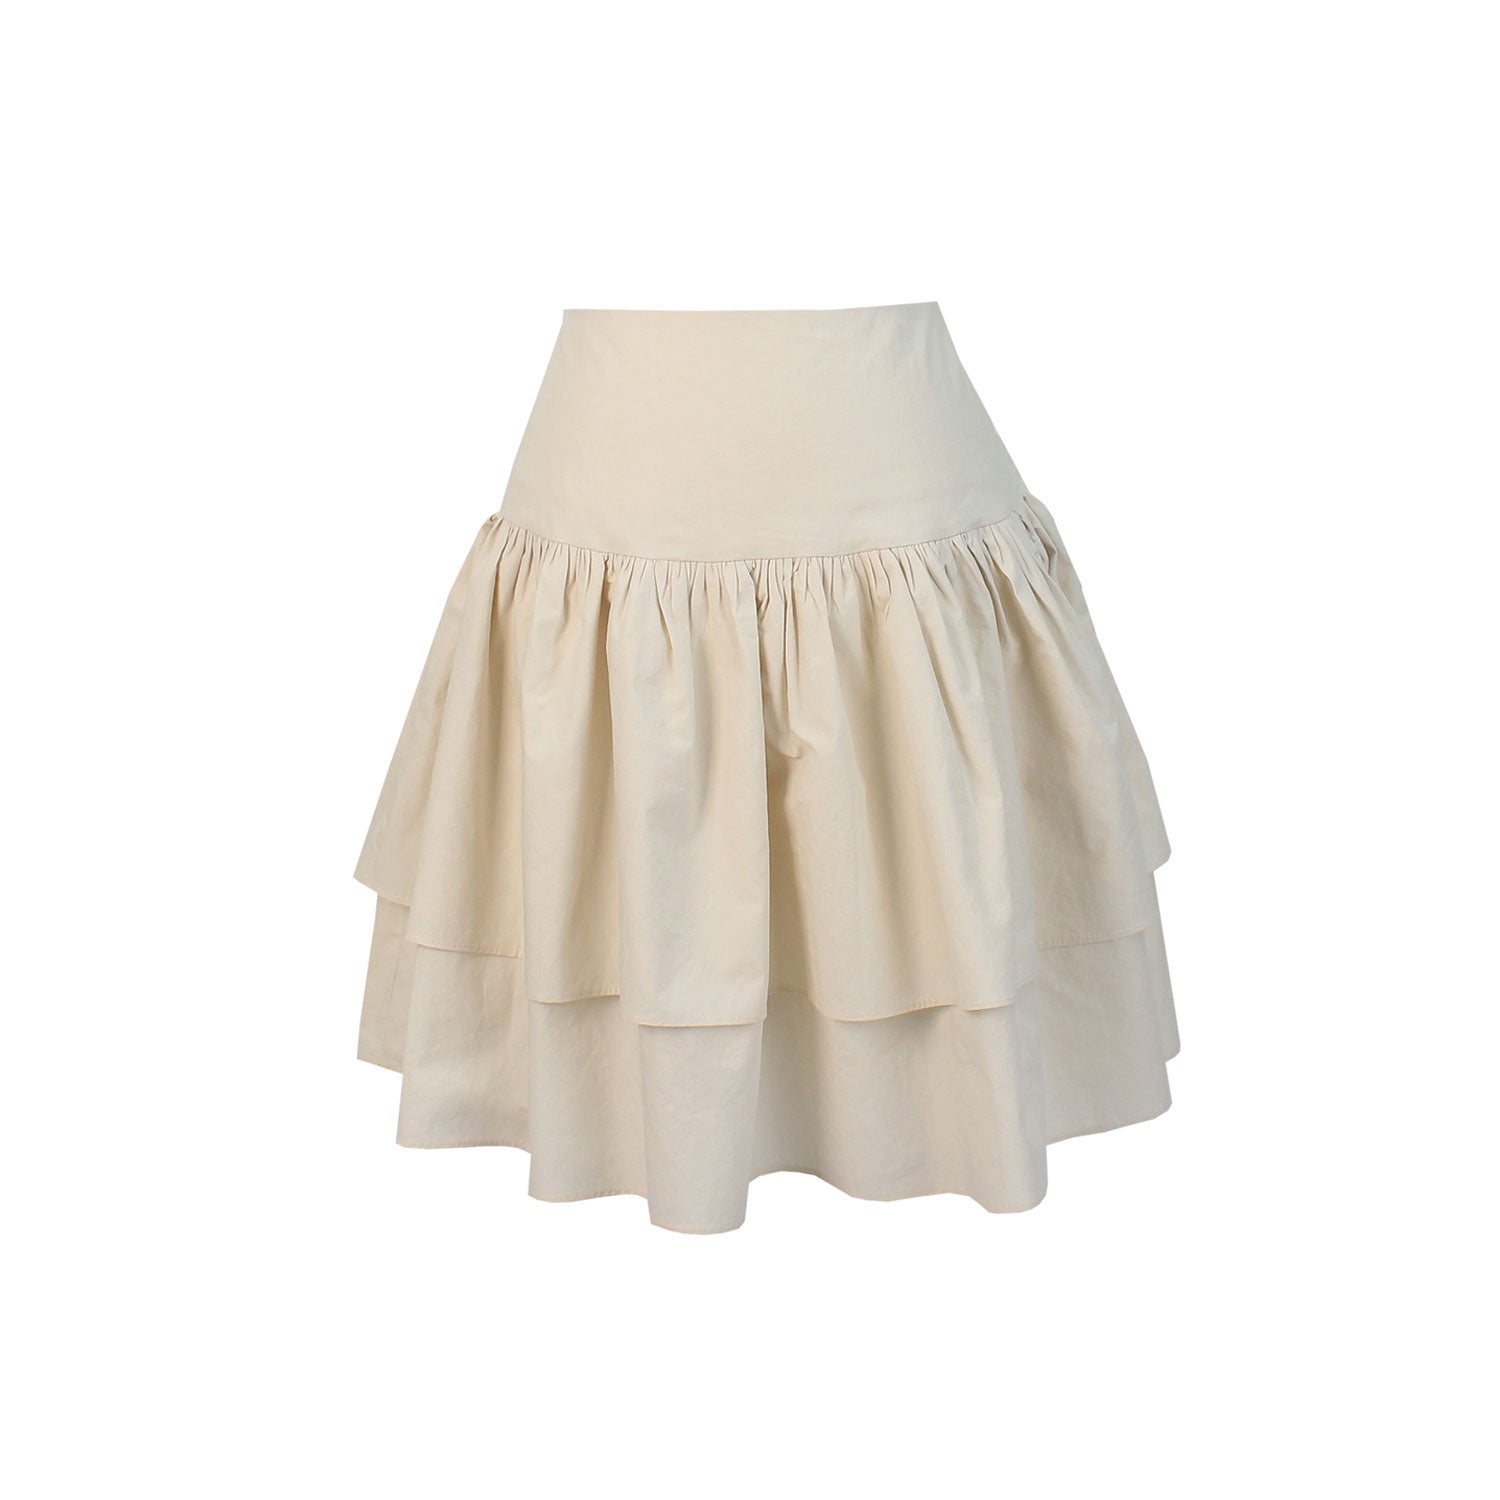 Floria shirring skirt